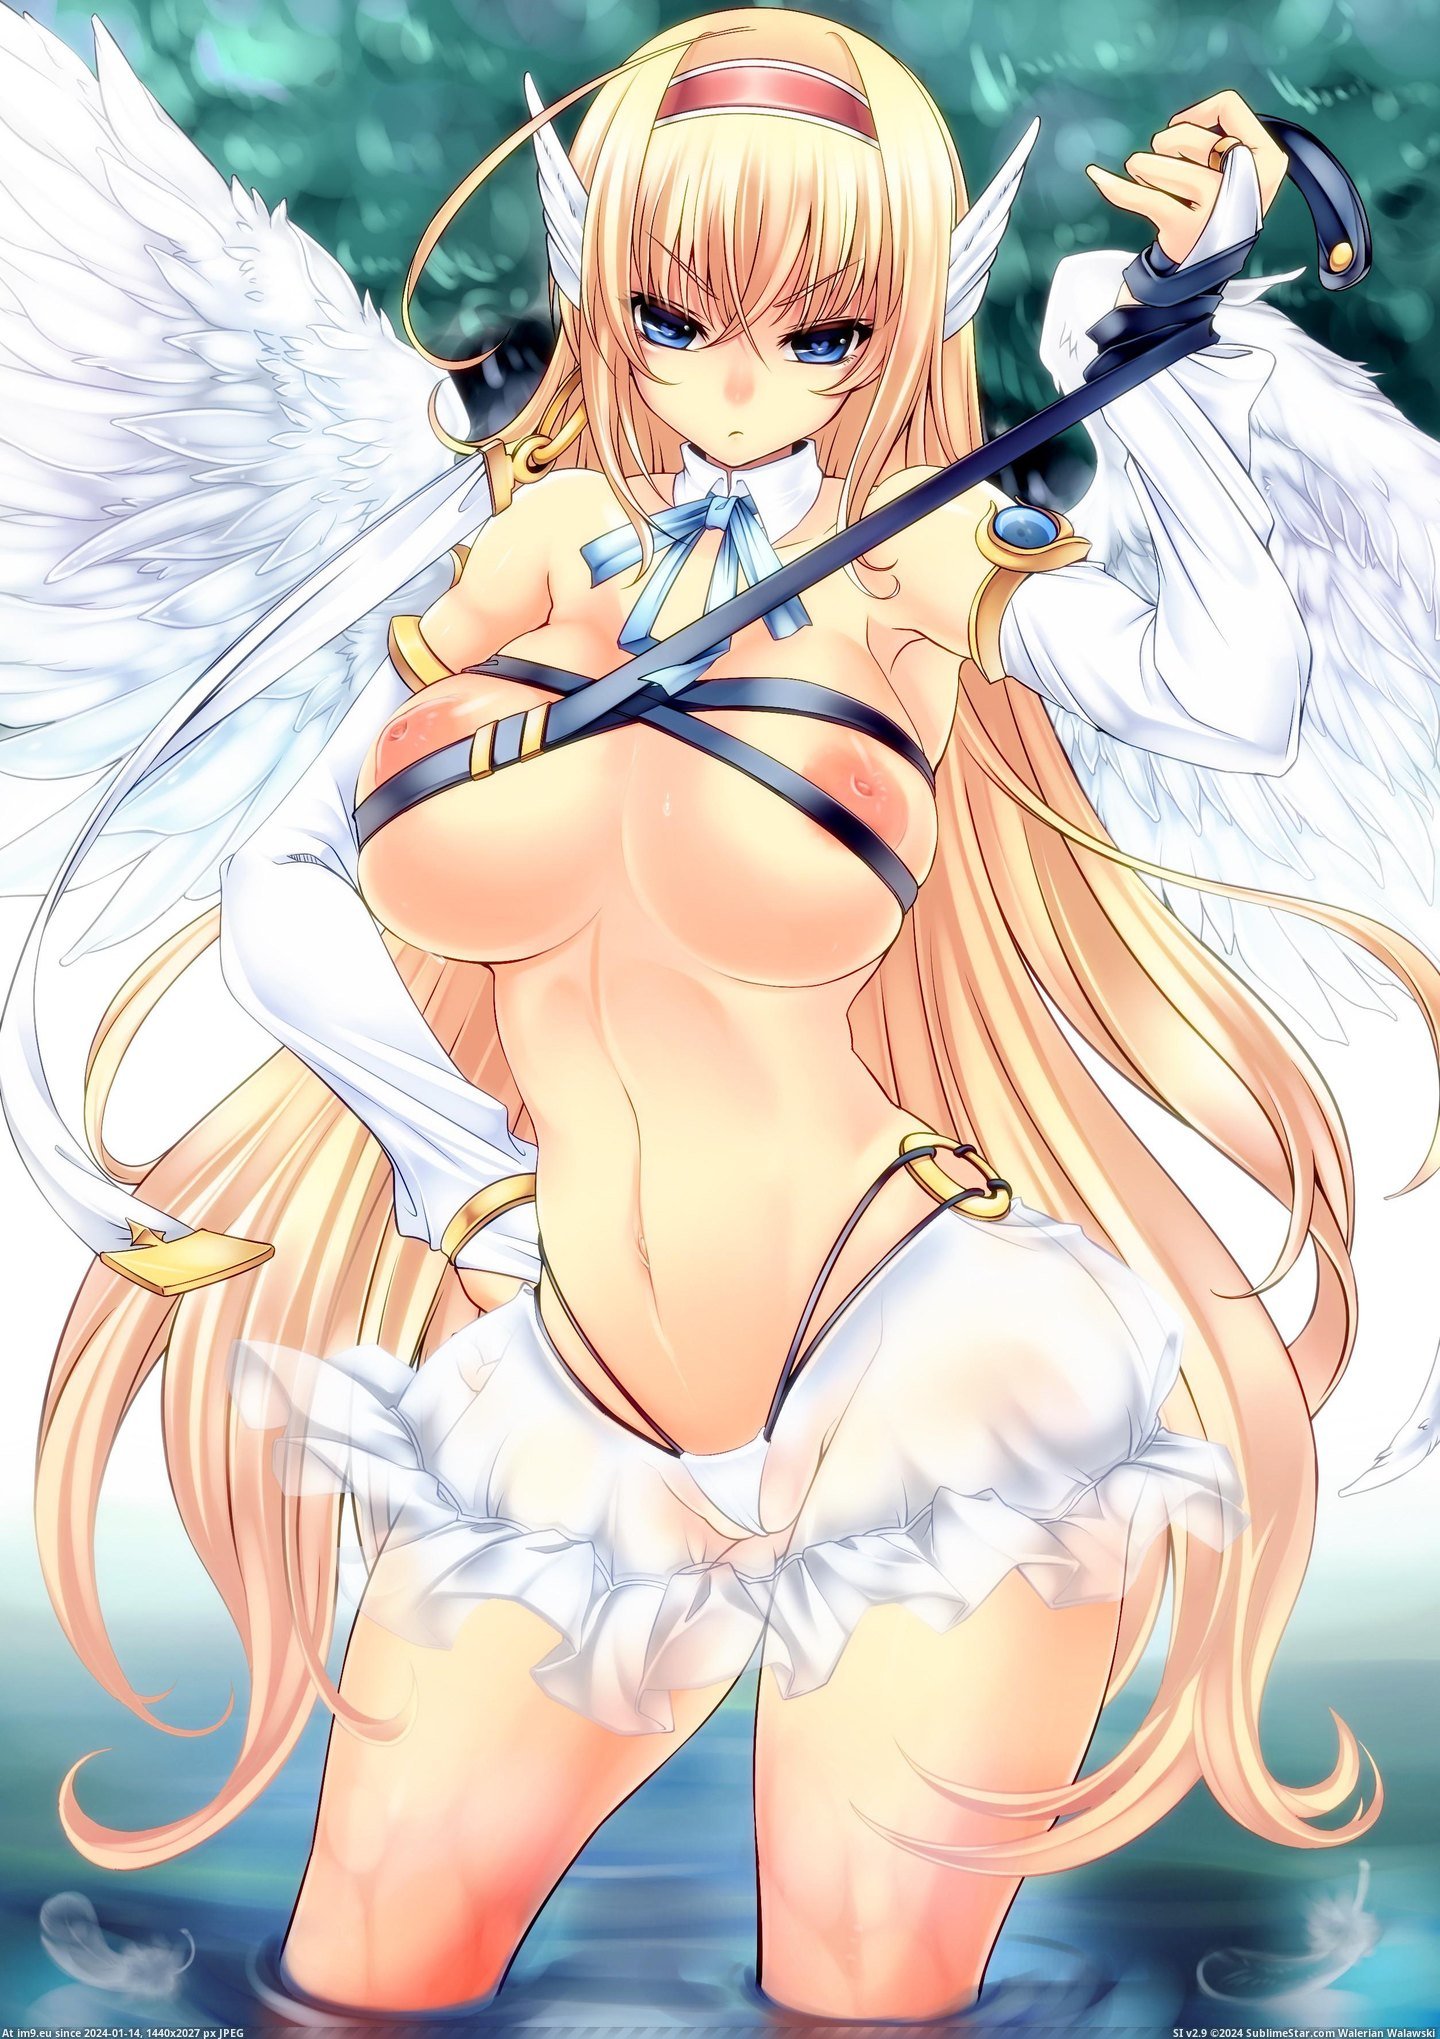 #Hentai #Angel #Sexy [Hentai] Sexy Angel Pic. (Image of album My r/HENTAI favs))